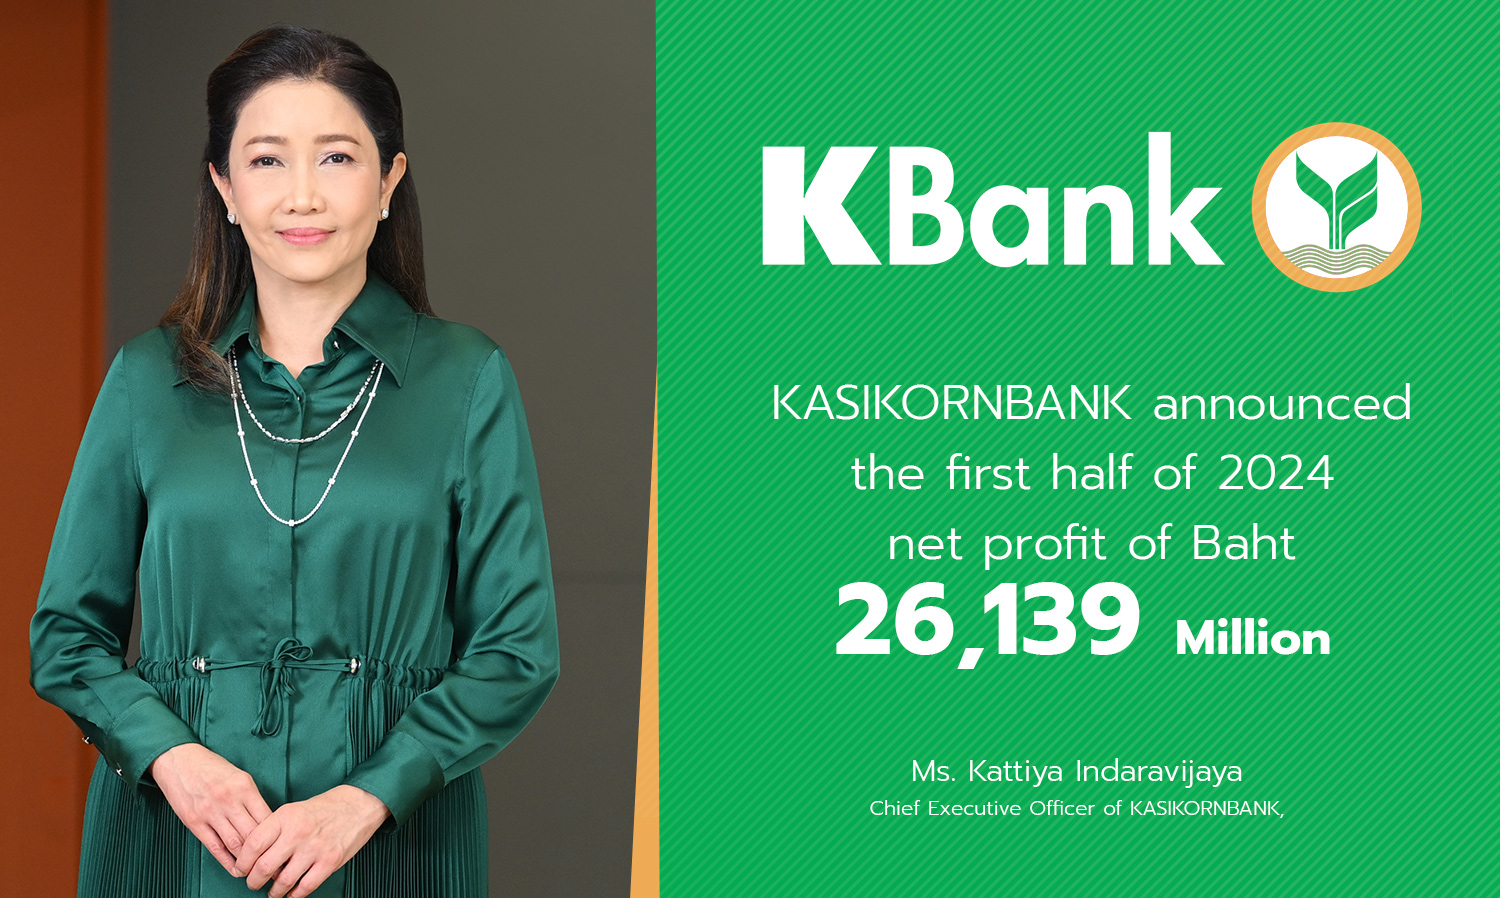 KASIKORNBANK announced the first half of 2024 net profit of Baht 26,139 Million 